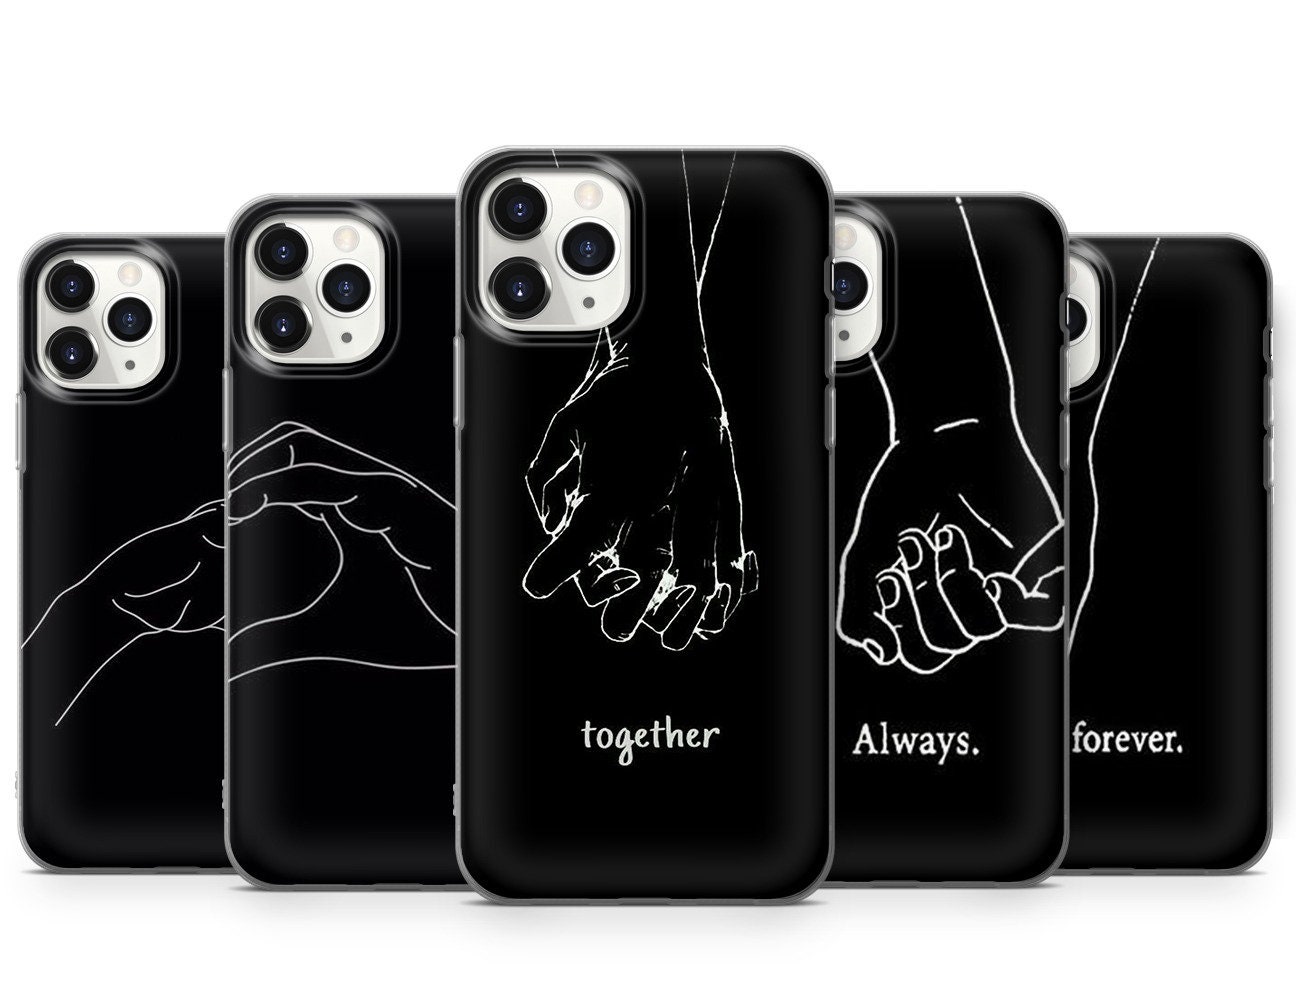 2pcs Black Cat Pattern Phone Case For Iphone 11 12 13 14 Pro Max Mini Xr